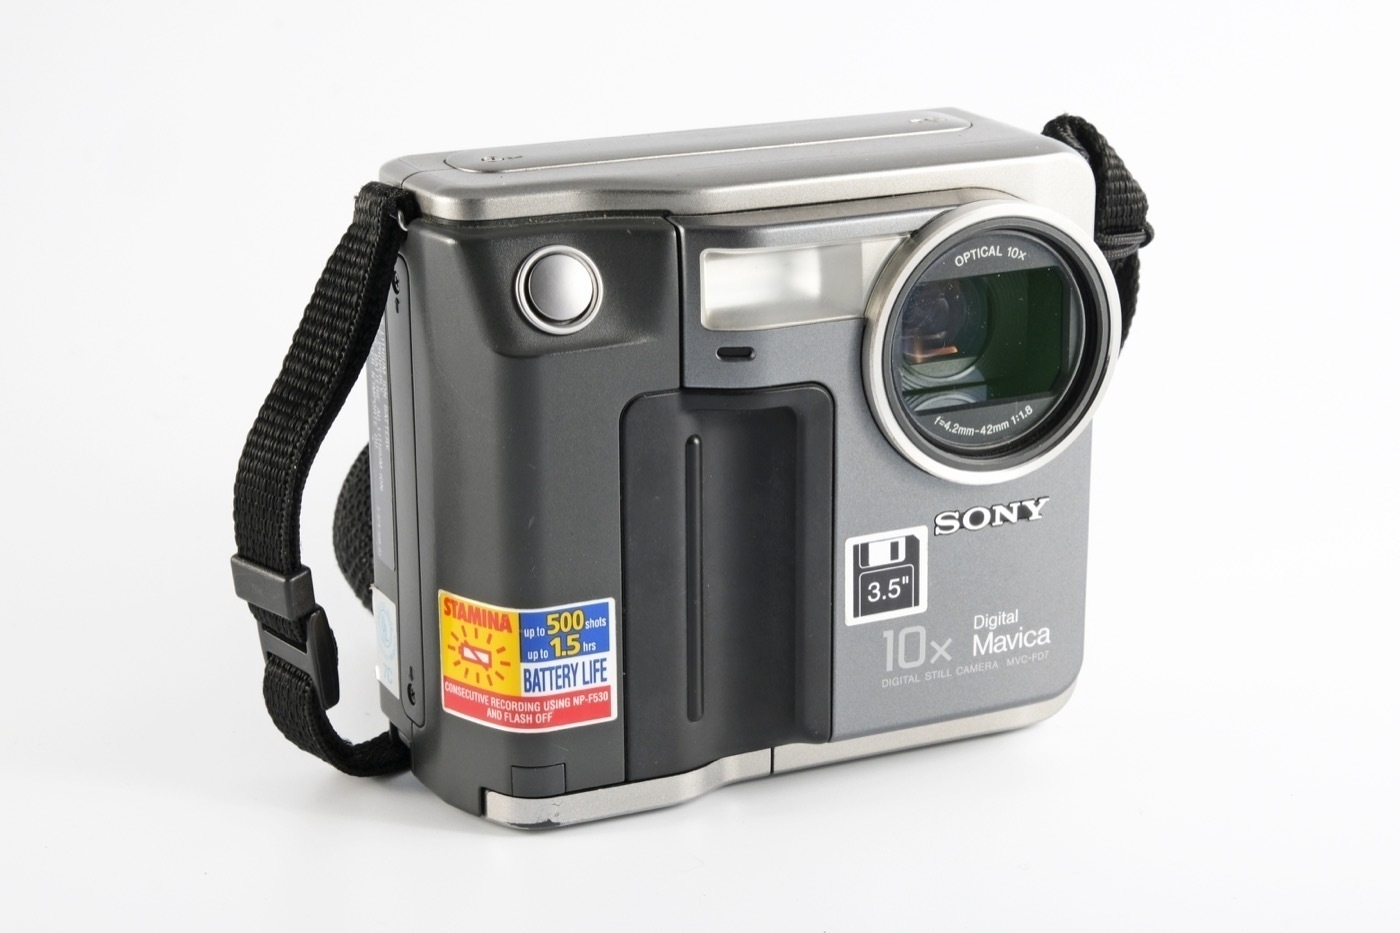 sony digital camera with floppy disk drive